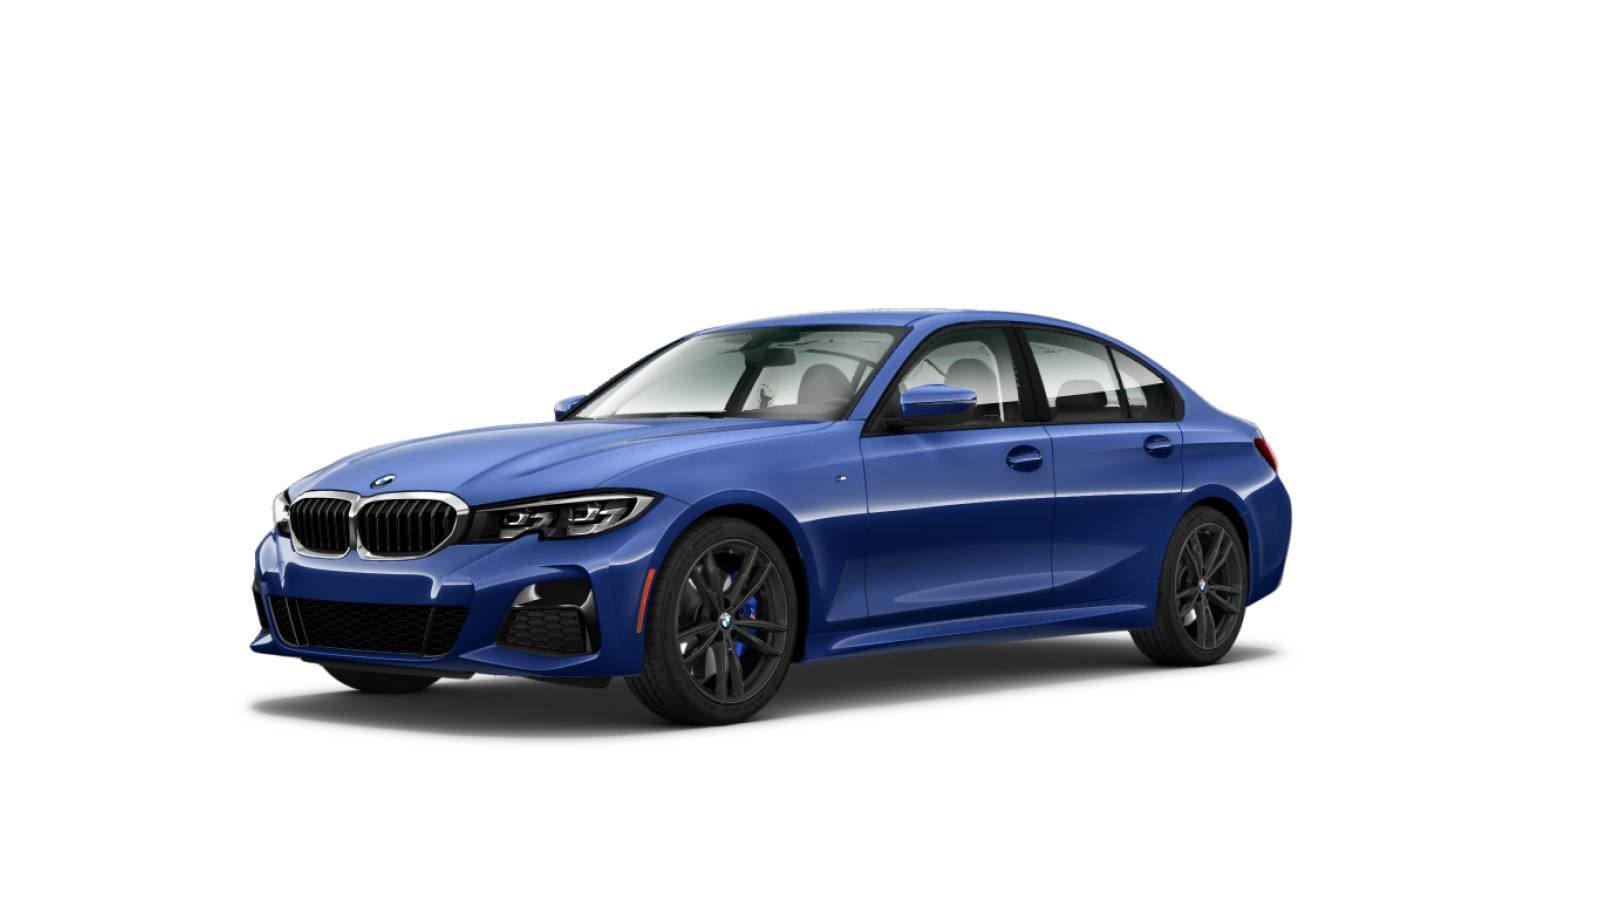 2019 BMW 3 Series G20 - Front